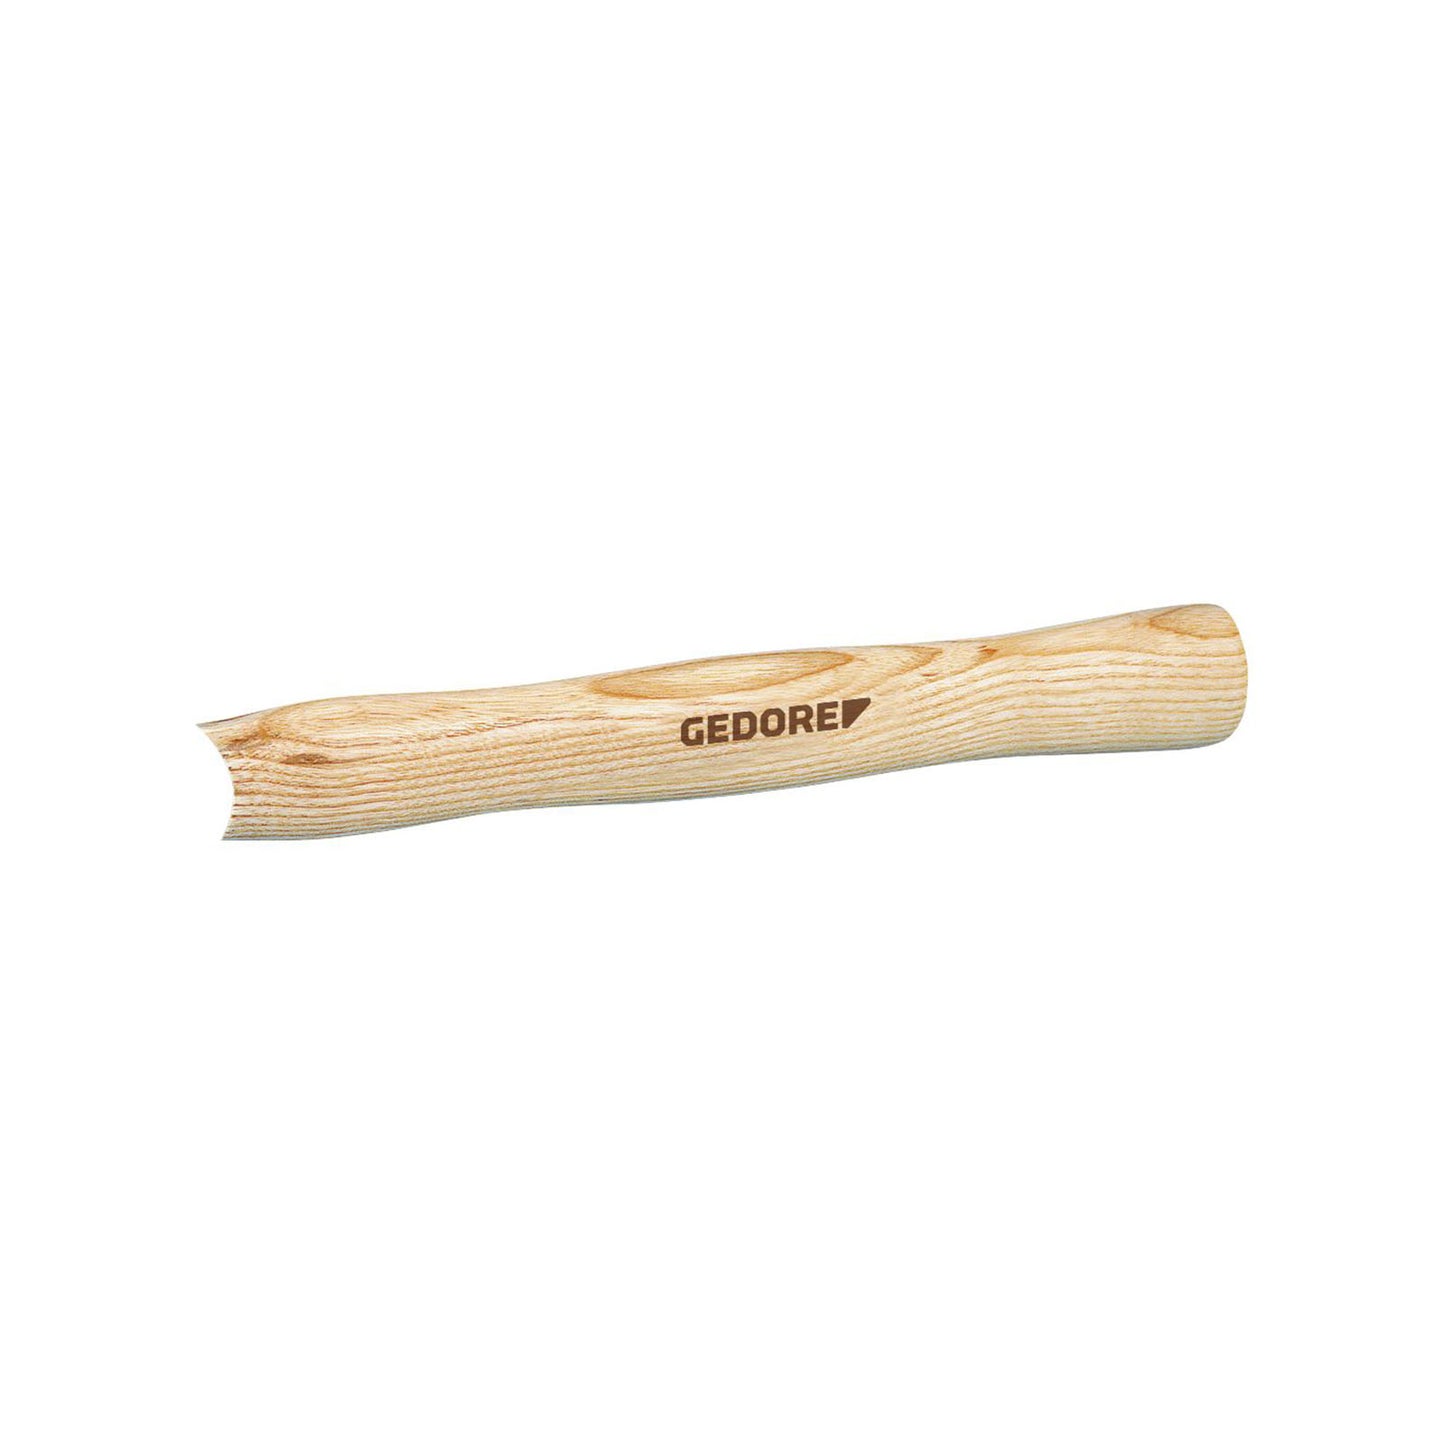 GEDORE E 224 E-50 - Ash replacement handle 34cm (8824290)